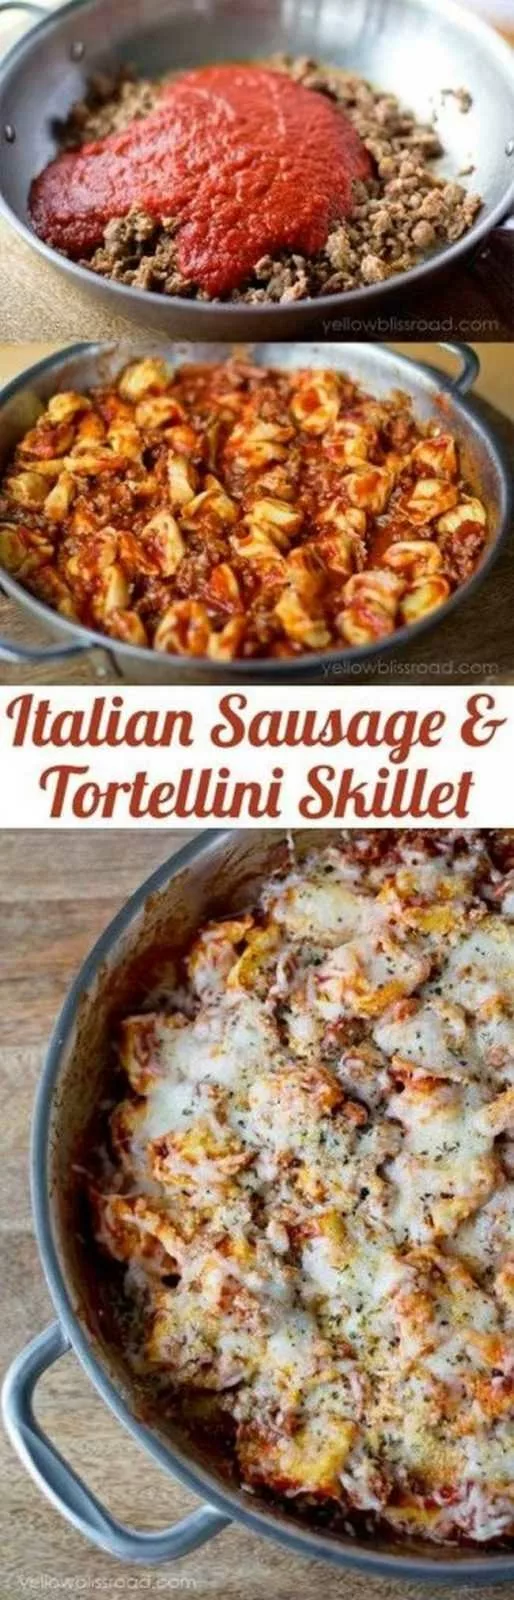 20 Delicious Italian Recipes